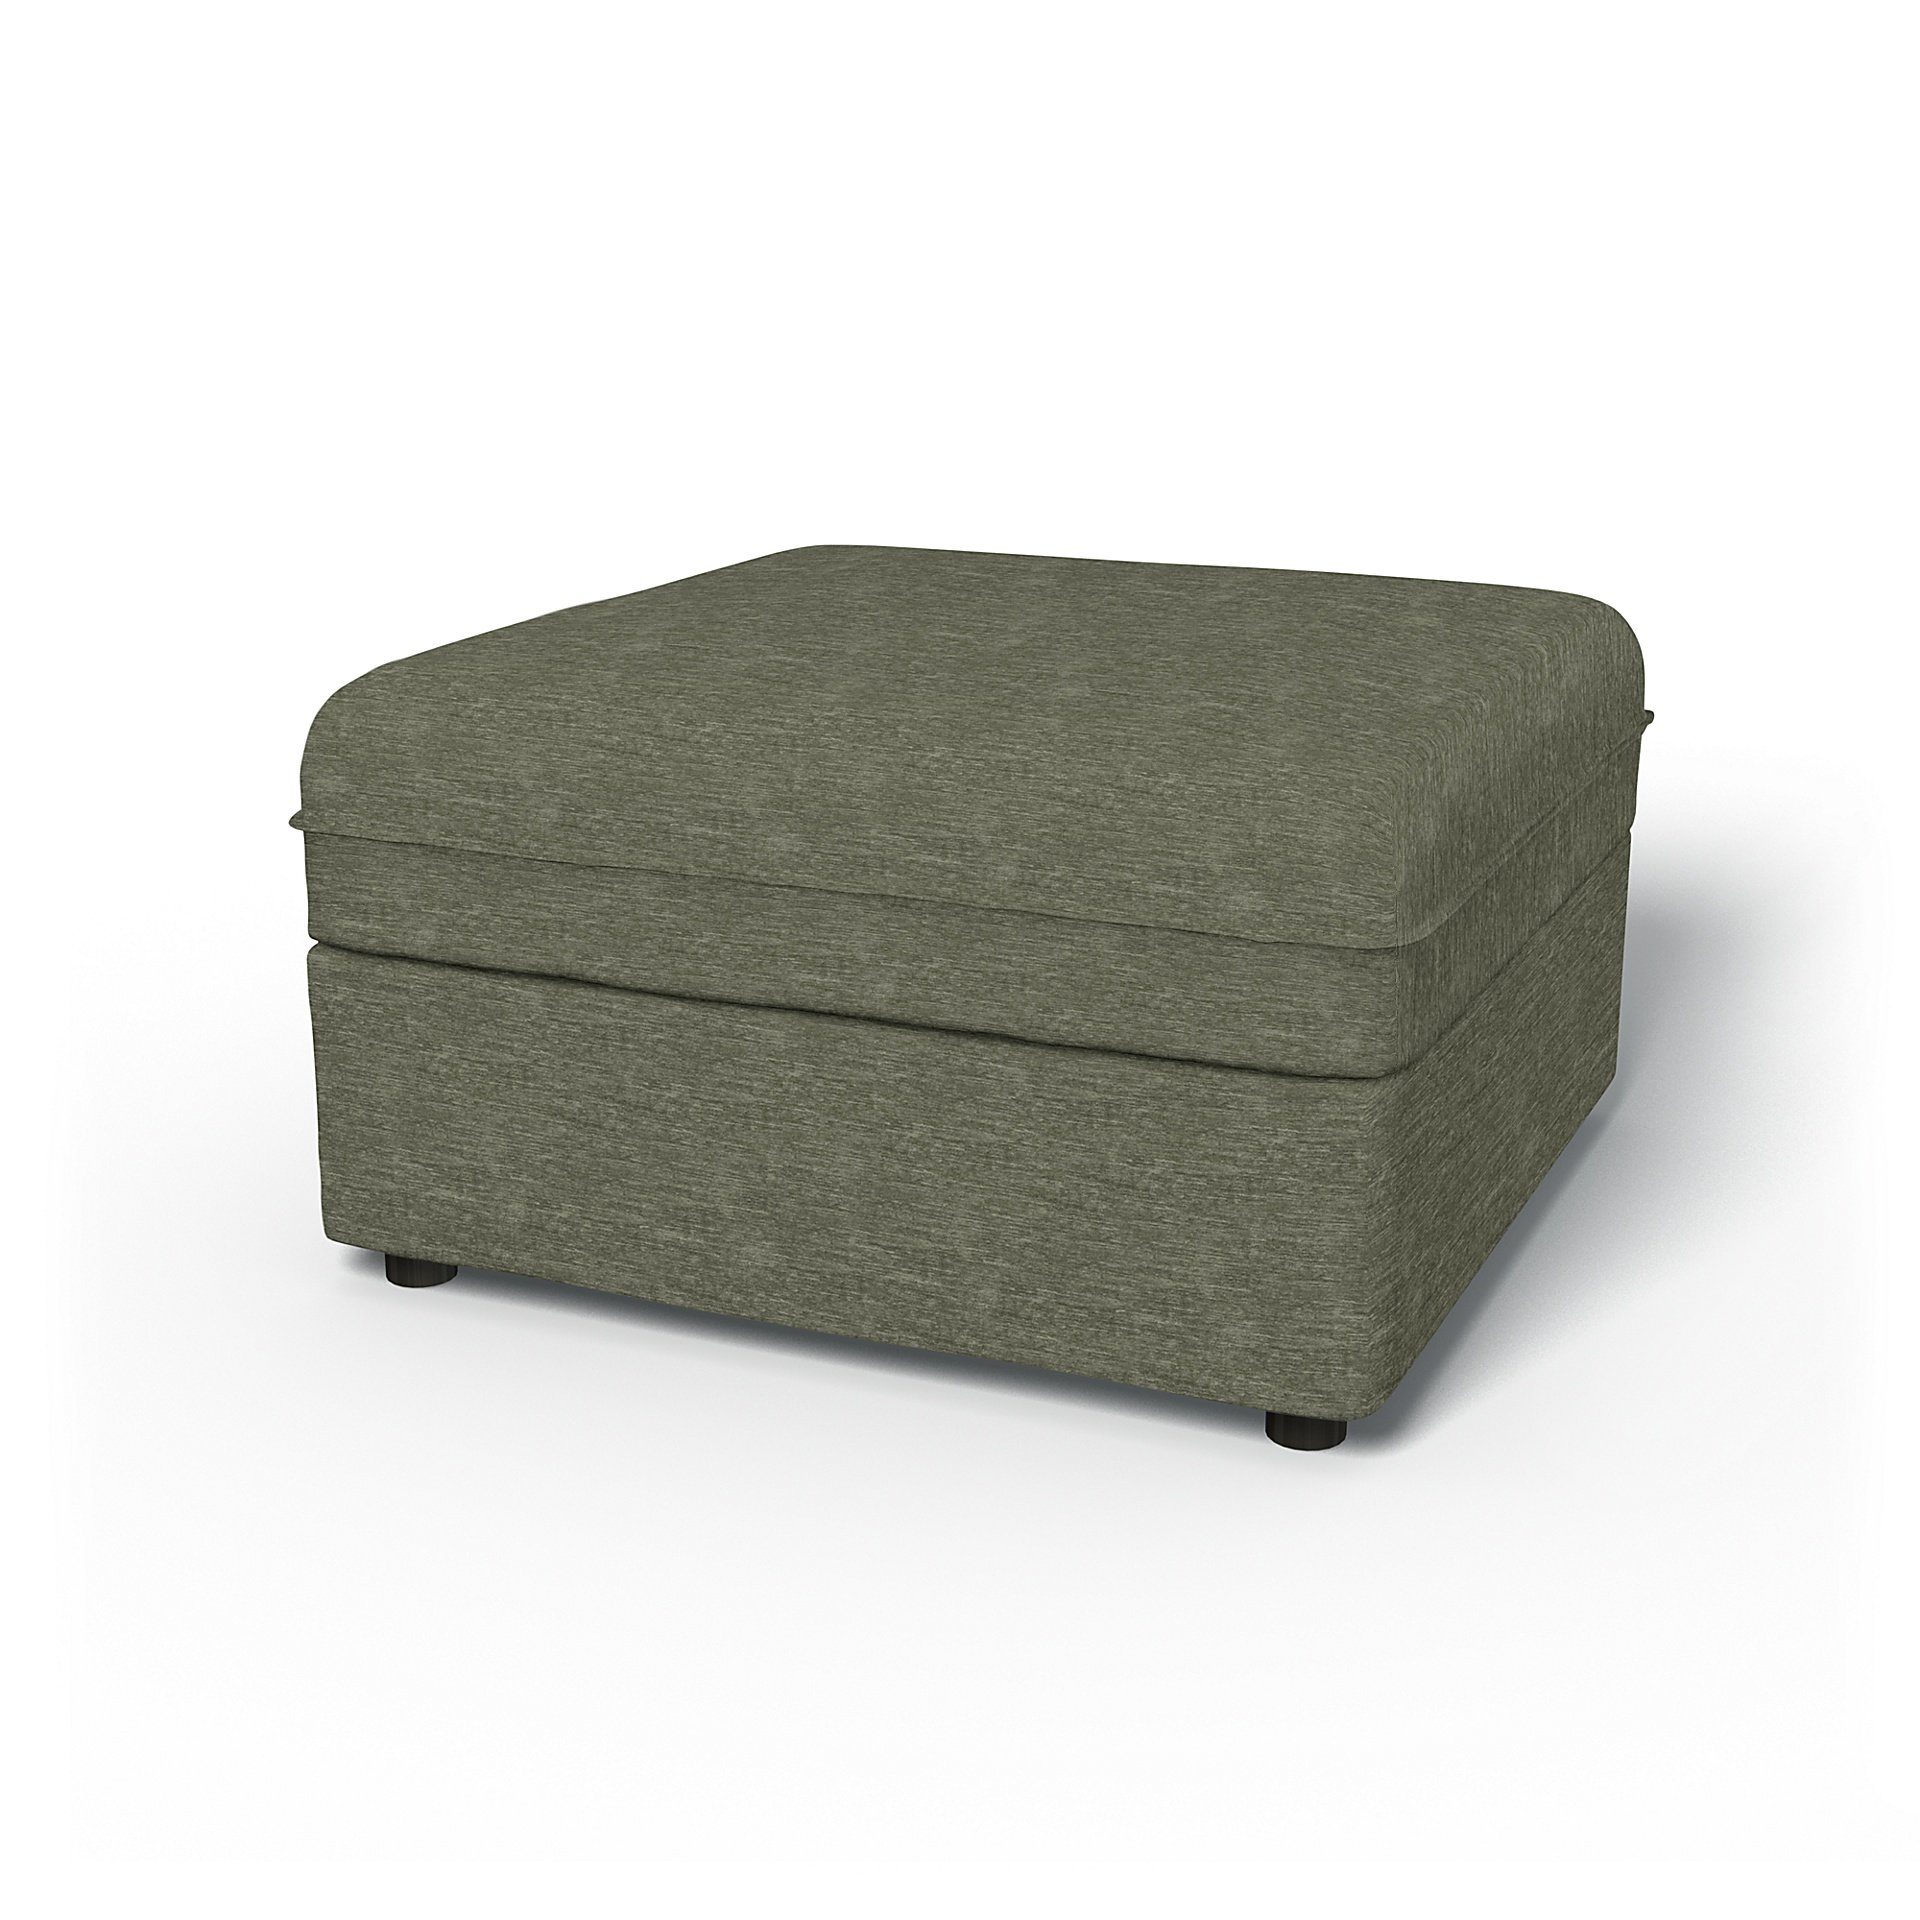 IKEA - Vallentuna Seat Module with Storage Cover 80x80cm 32x32in, Green Grey, Velvet - Bemz